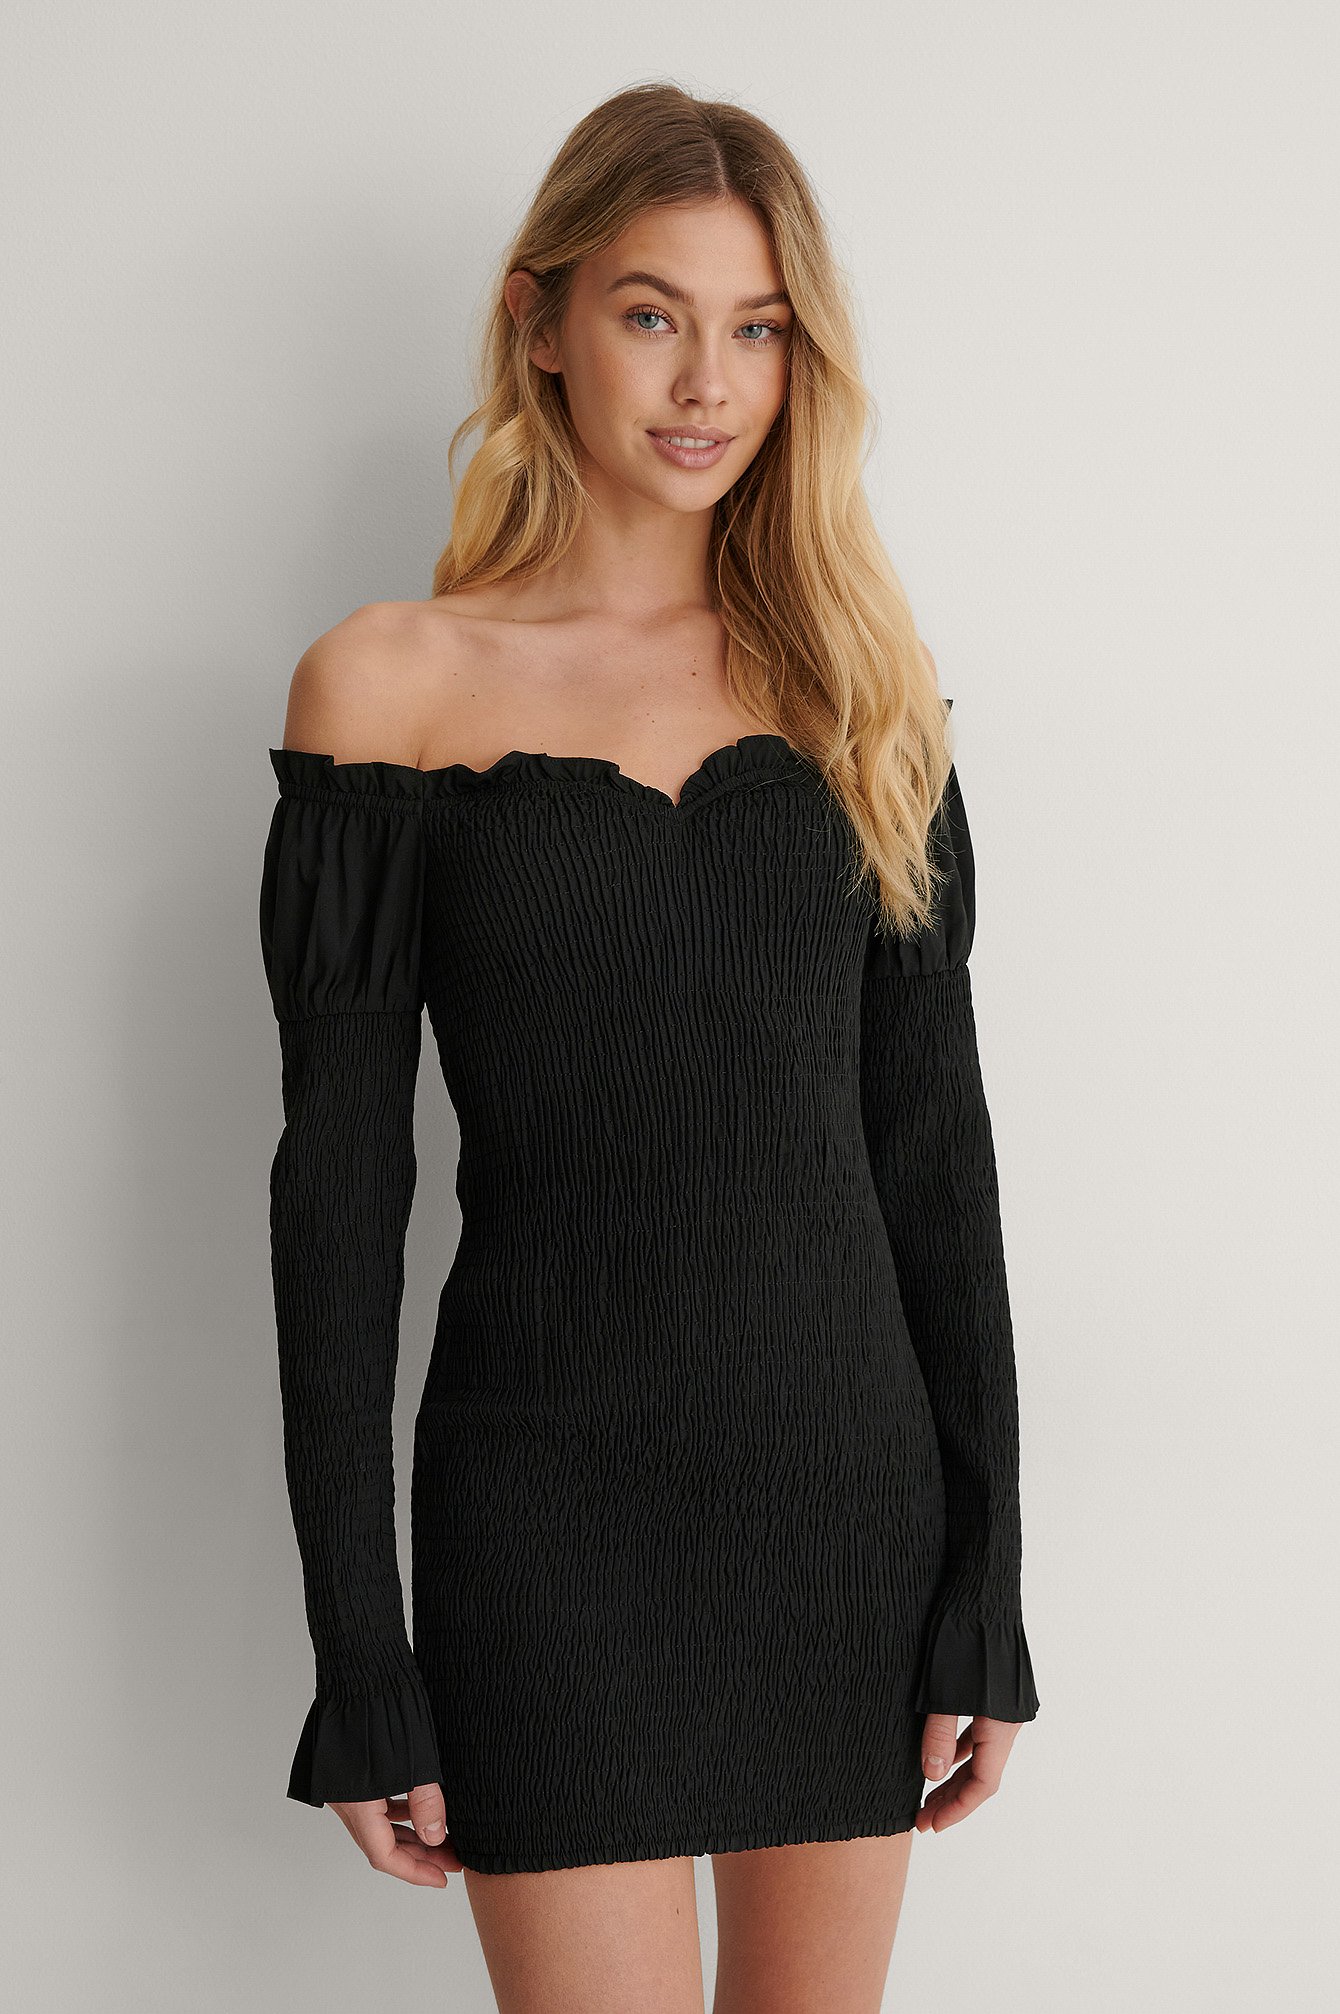 Outfitters nation Off the shoulder jurk zwart gestippeld elegant Mode Jurken Off the shoulder jurken 